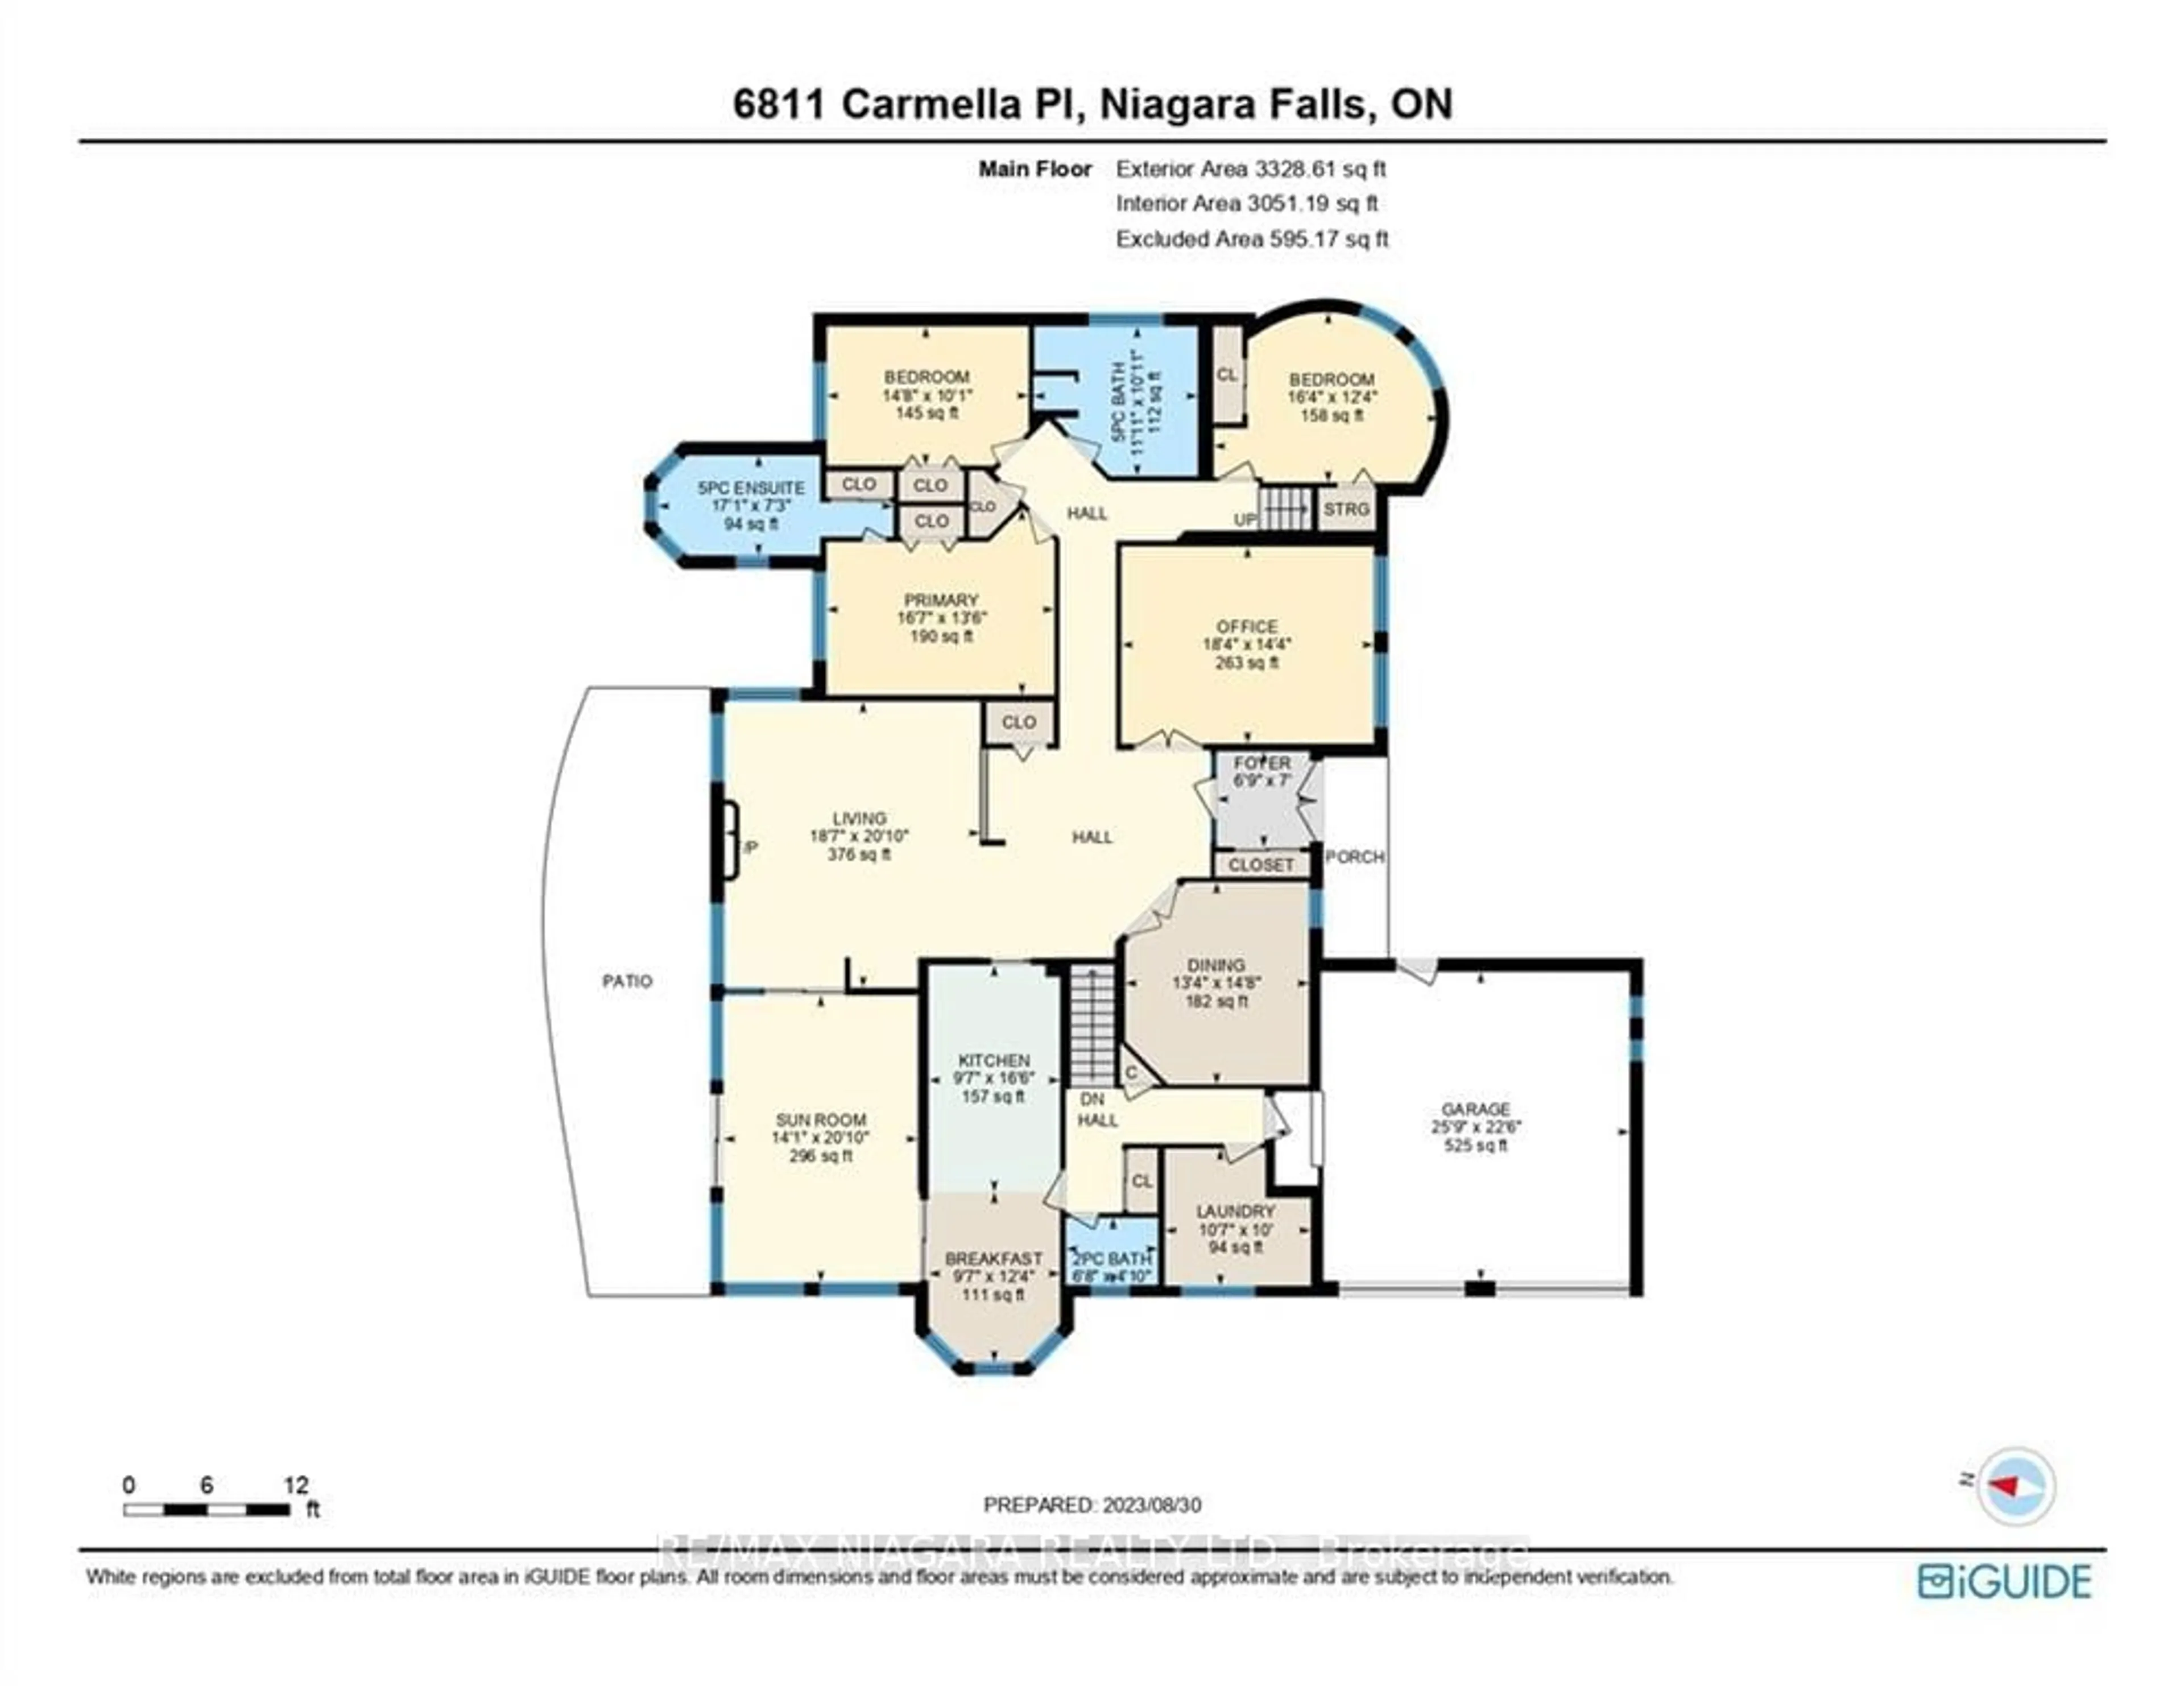 Floor plan for 6811 Carmella Pl, Niagara Falls Ontario L2J 4J4